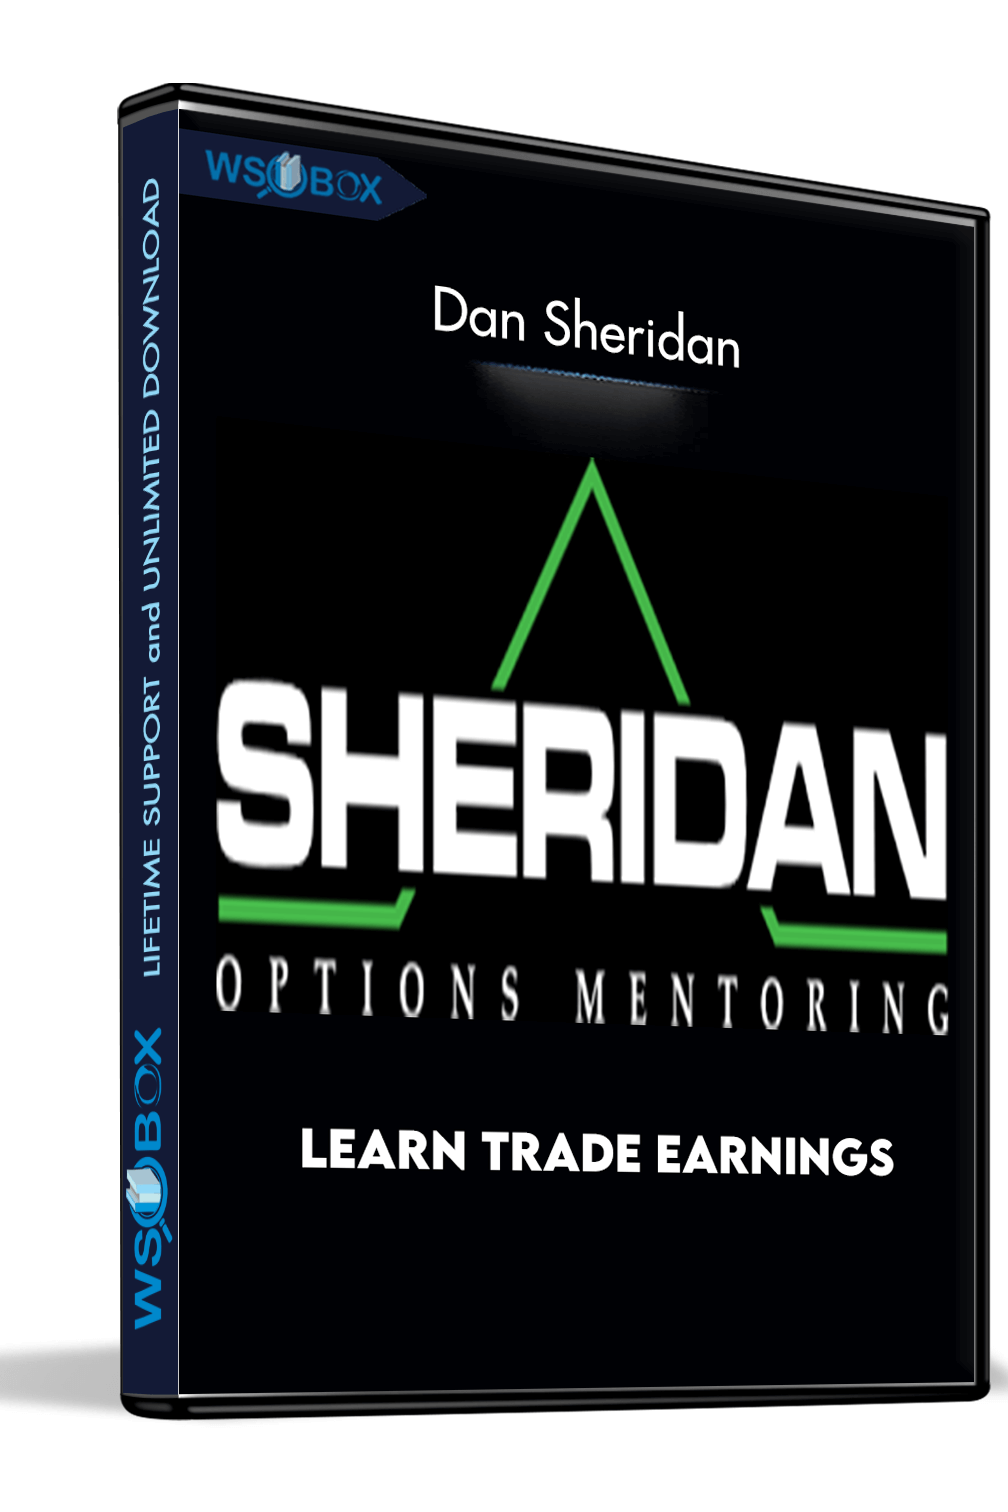 Learn Trade Earnings – Dan Sheridan